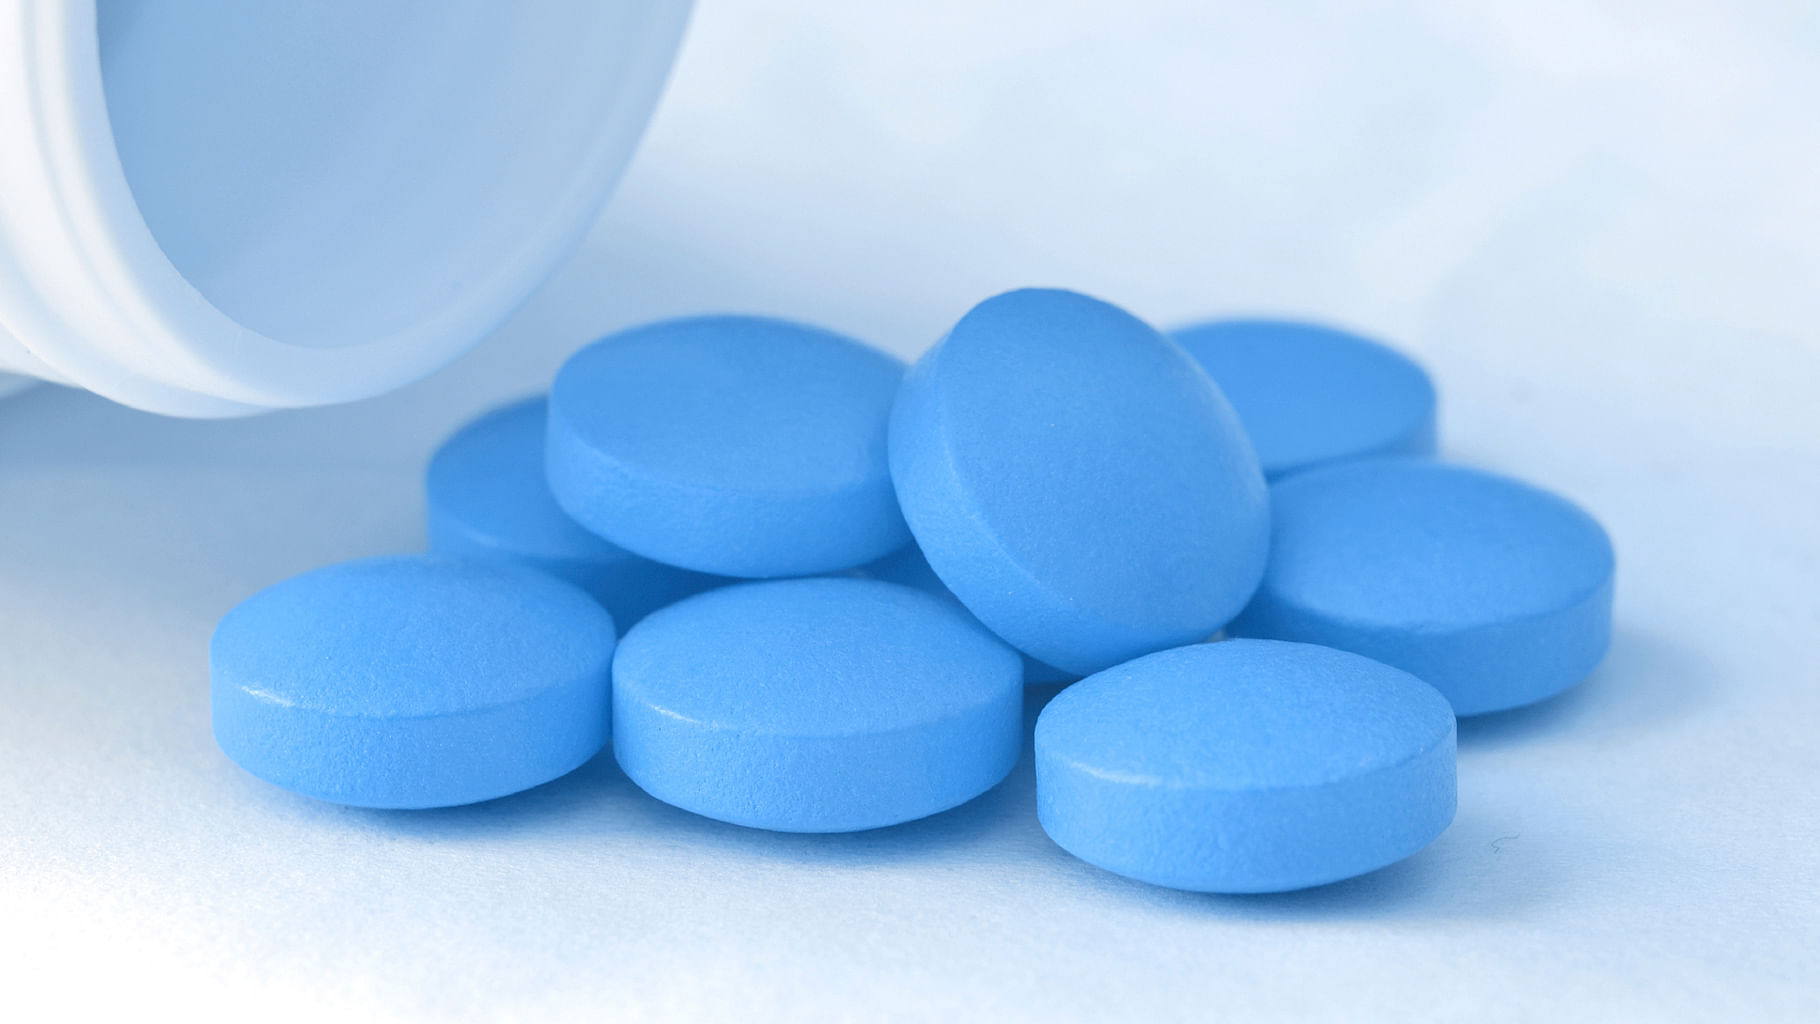 Representational image of viagra pills. (Photo: iStockphoto)